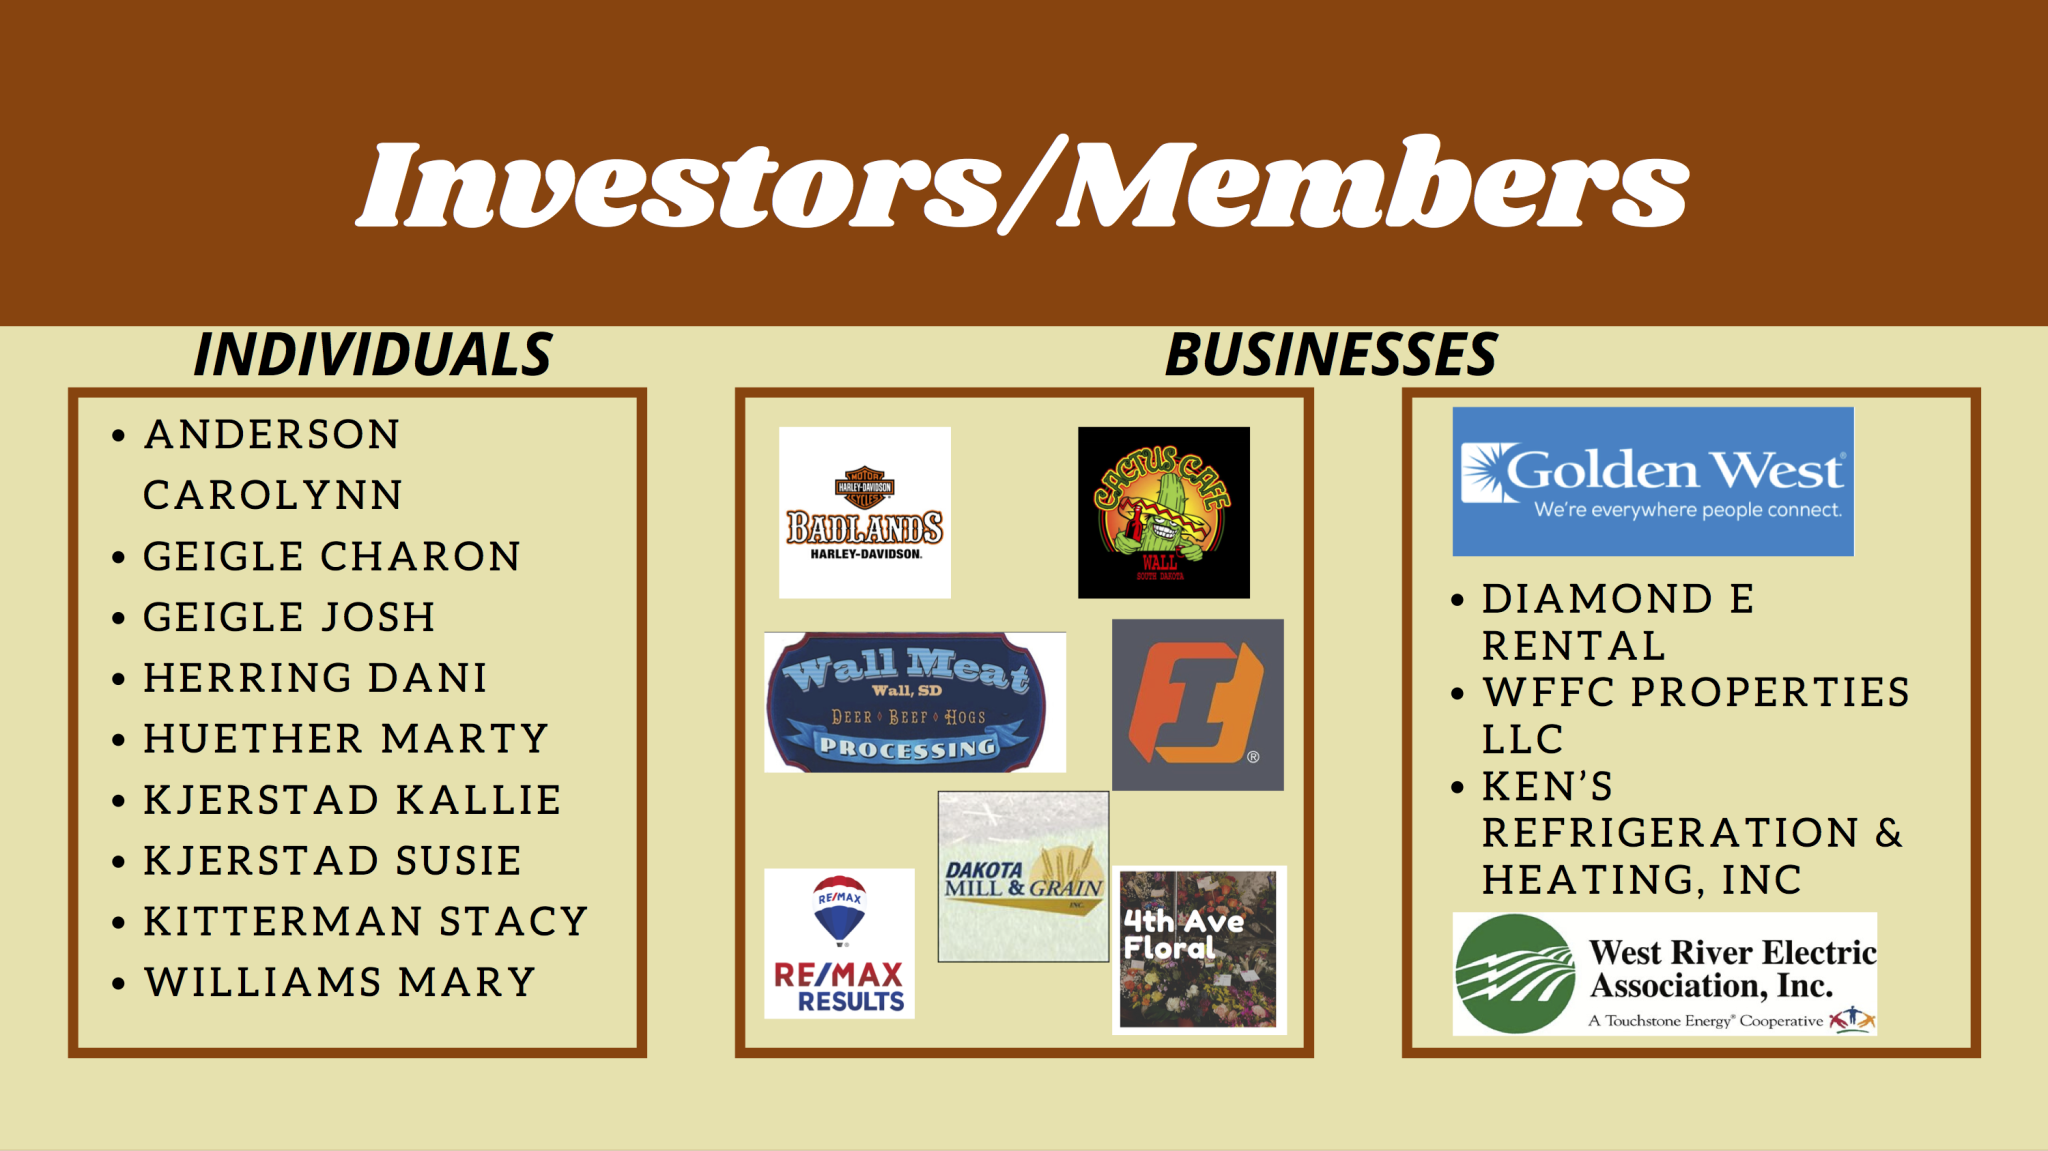 investors/members flyer